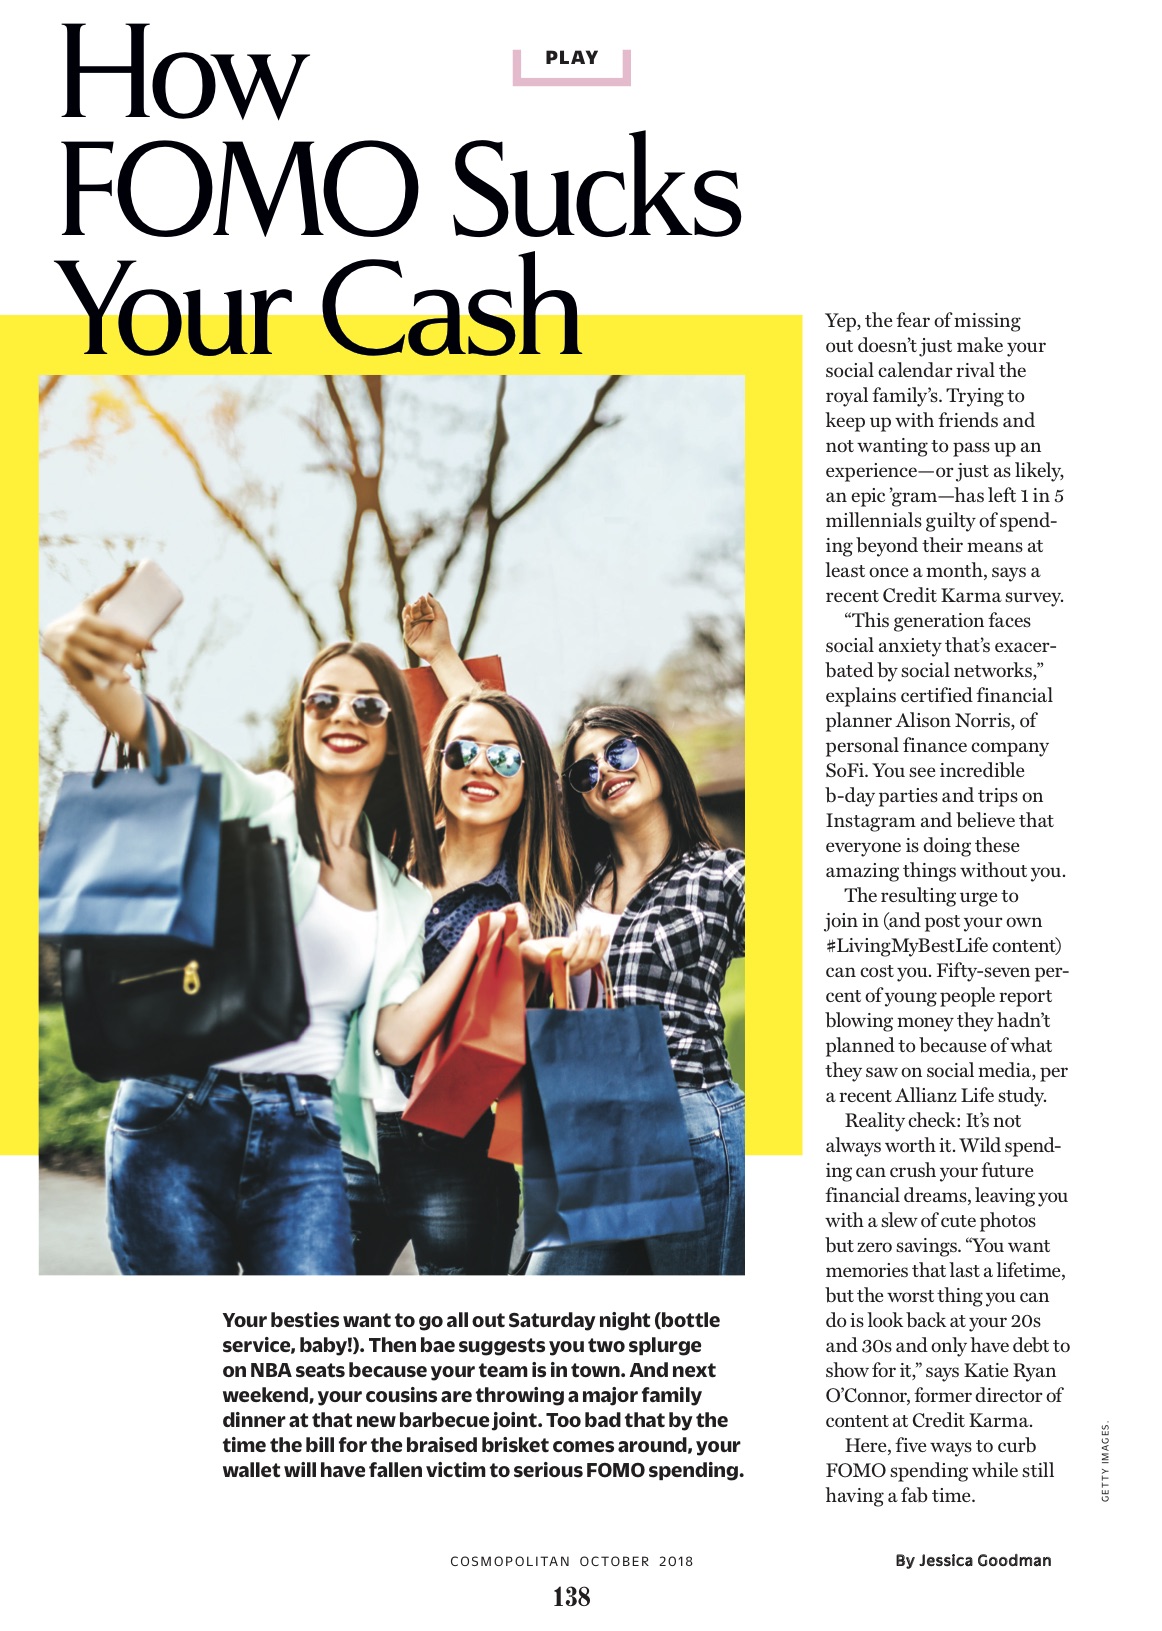 Cosmopolitan: How FOMO Sucks Your Cash